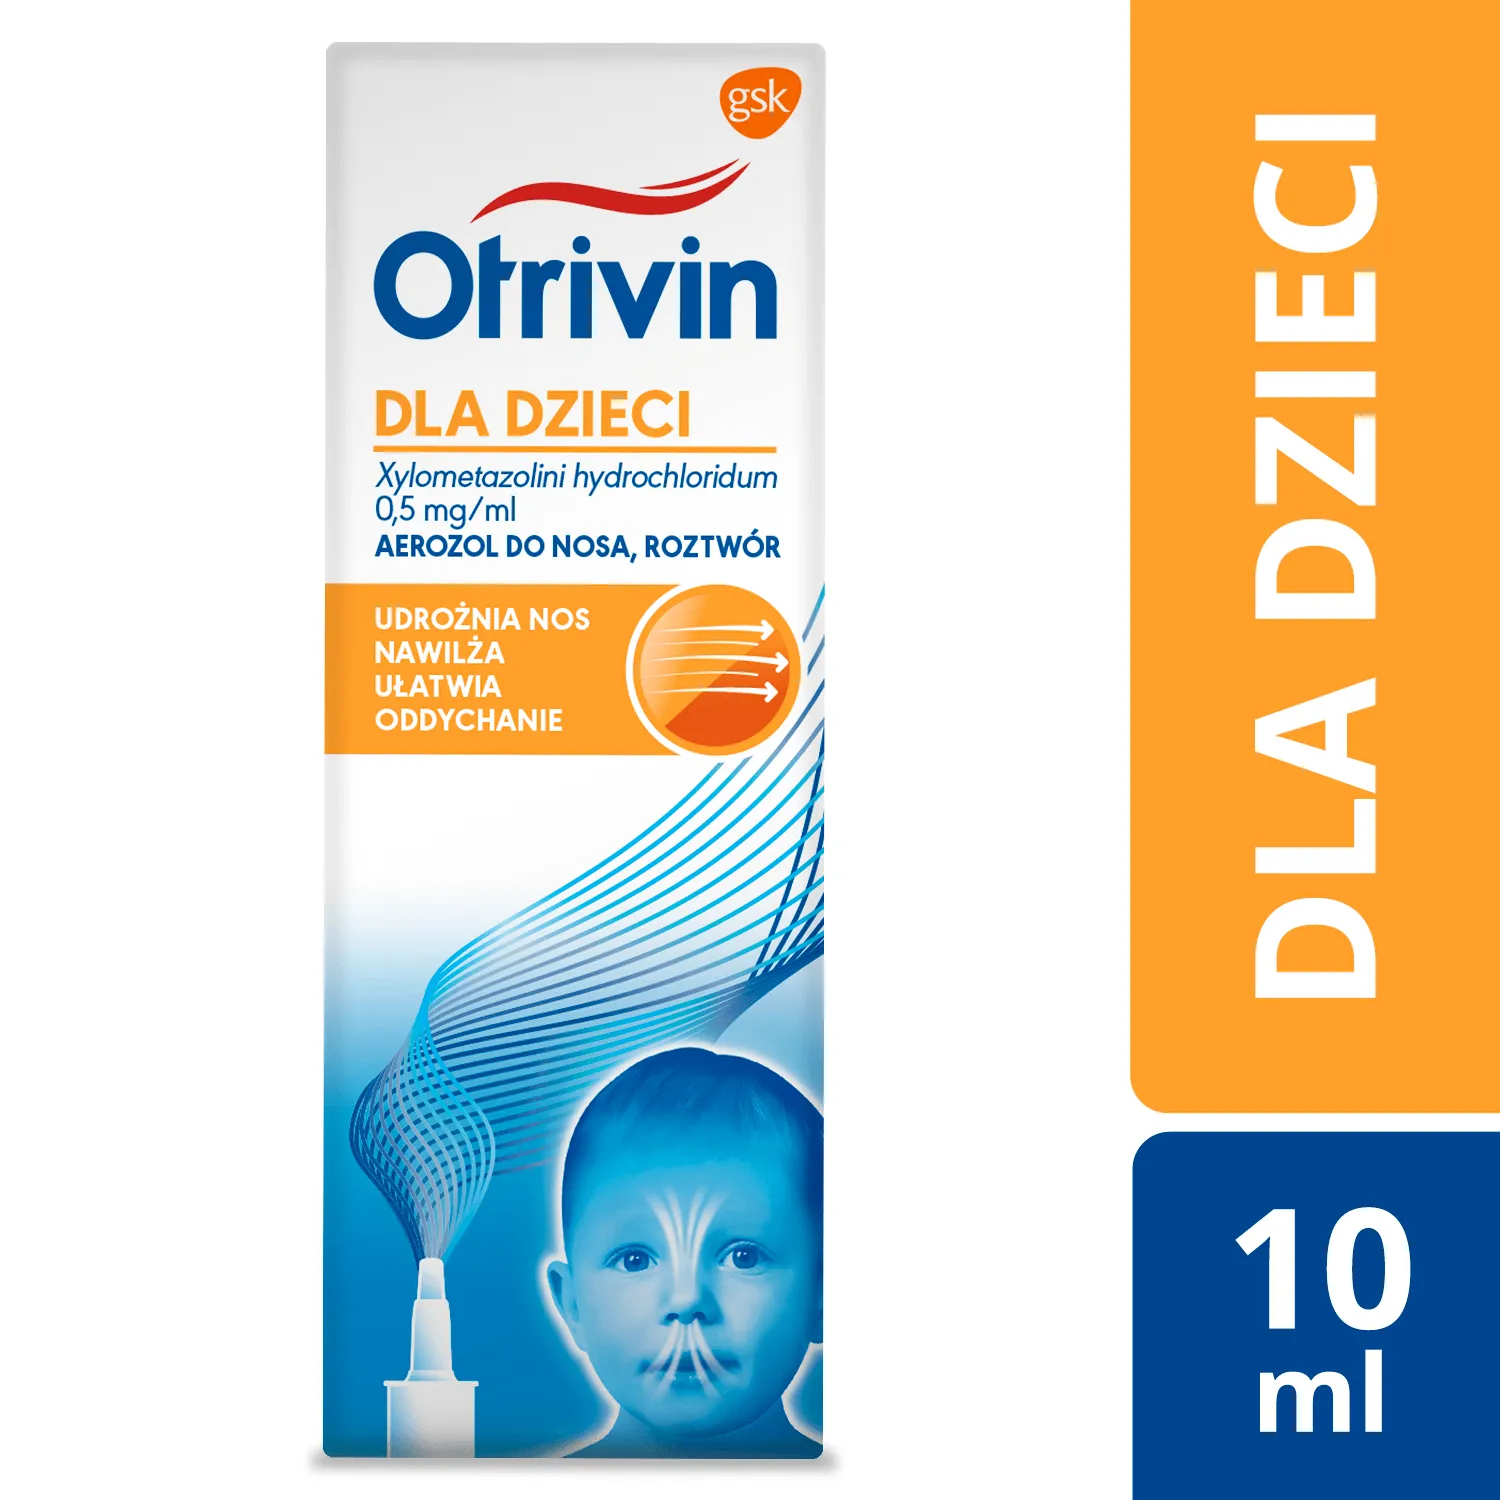 Otrivin dla dzieci, xylometazolini hydrochloridum, 0,5 mg/ml, aerozol do nosa, 10 ml roztworu